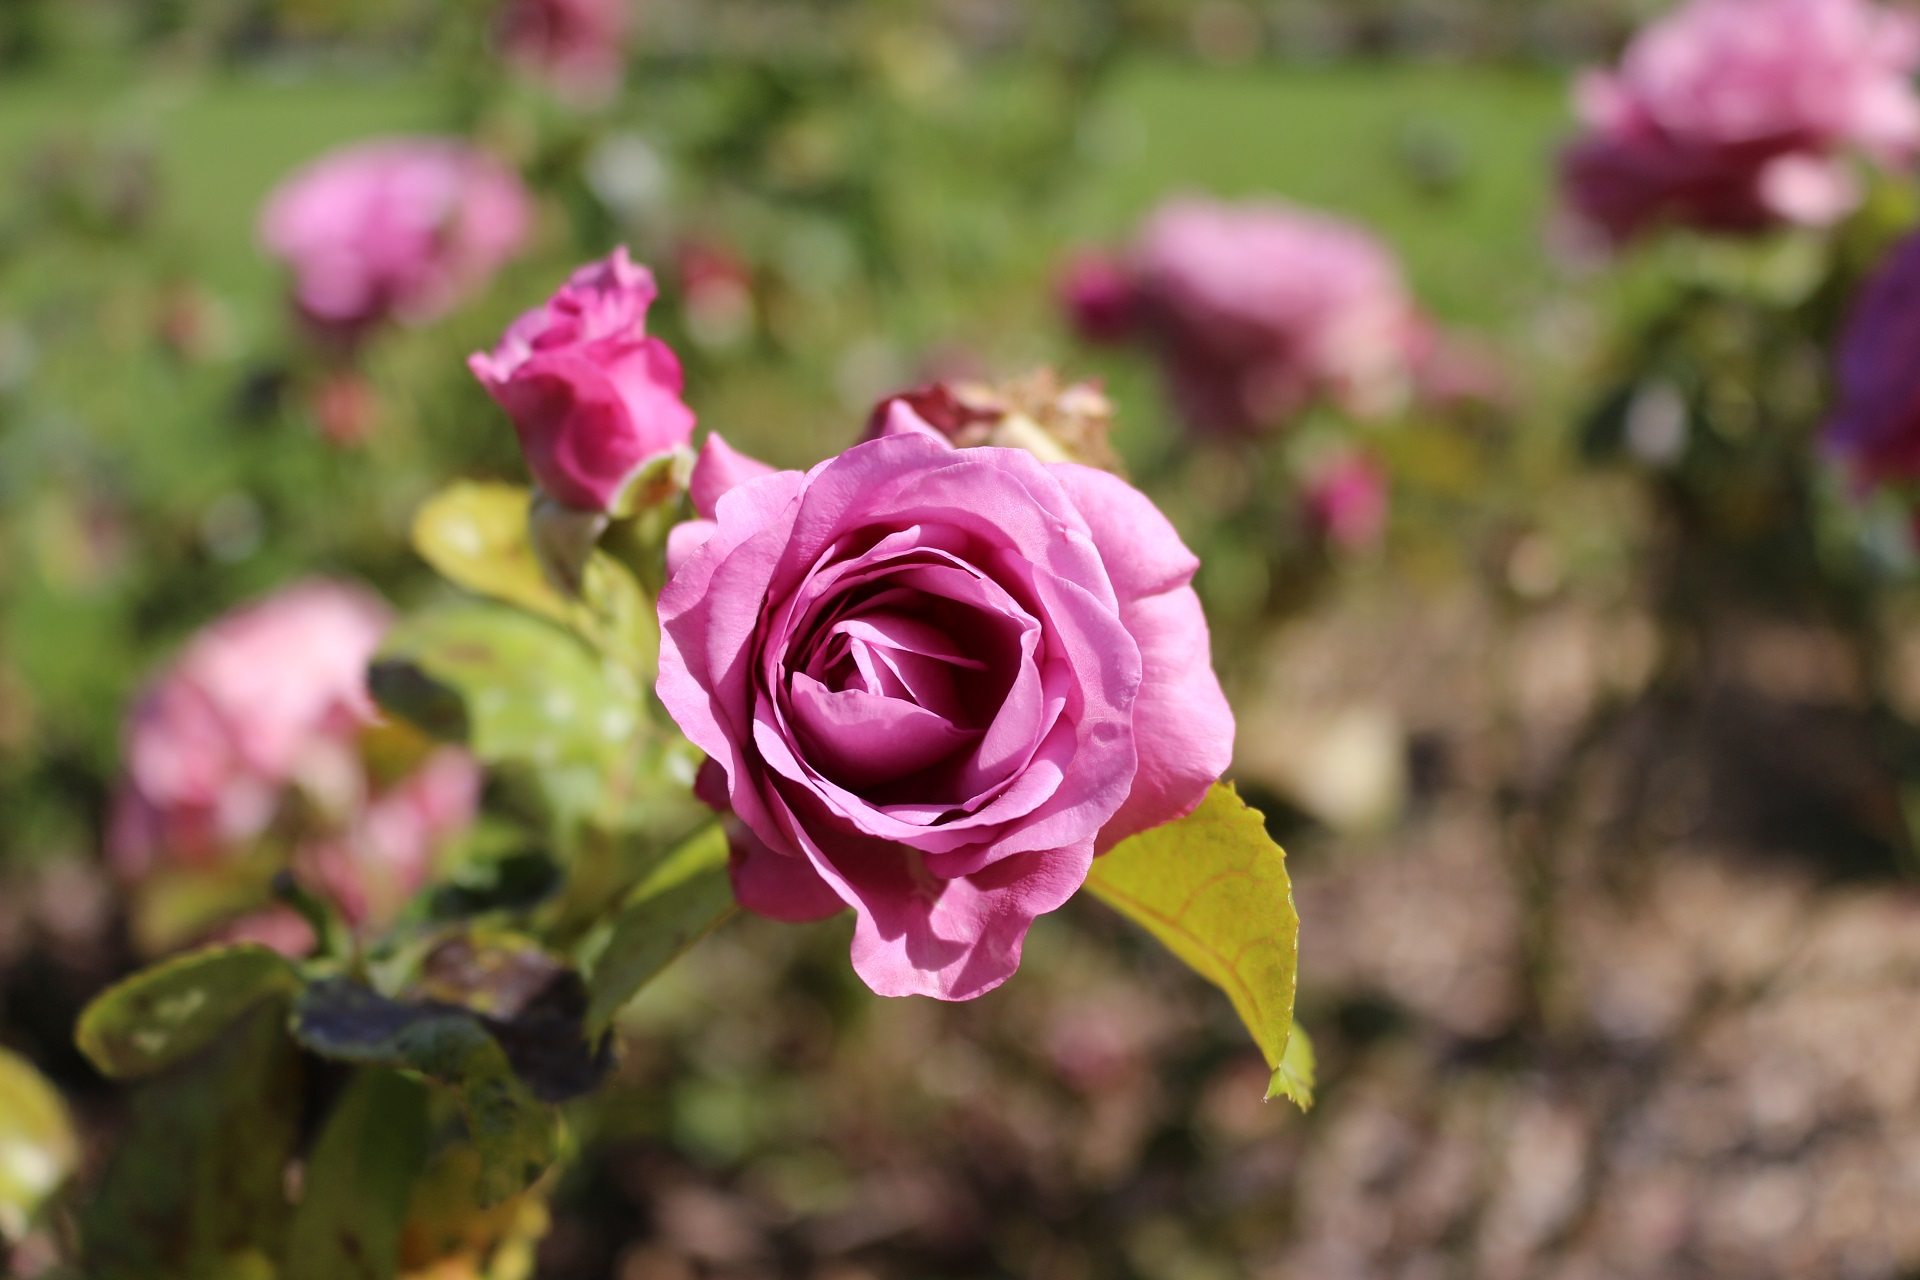 La rose Bossuet dans le jardin Bossuet de Meaux